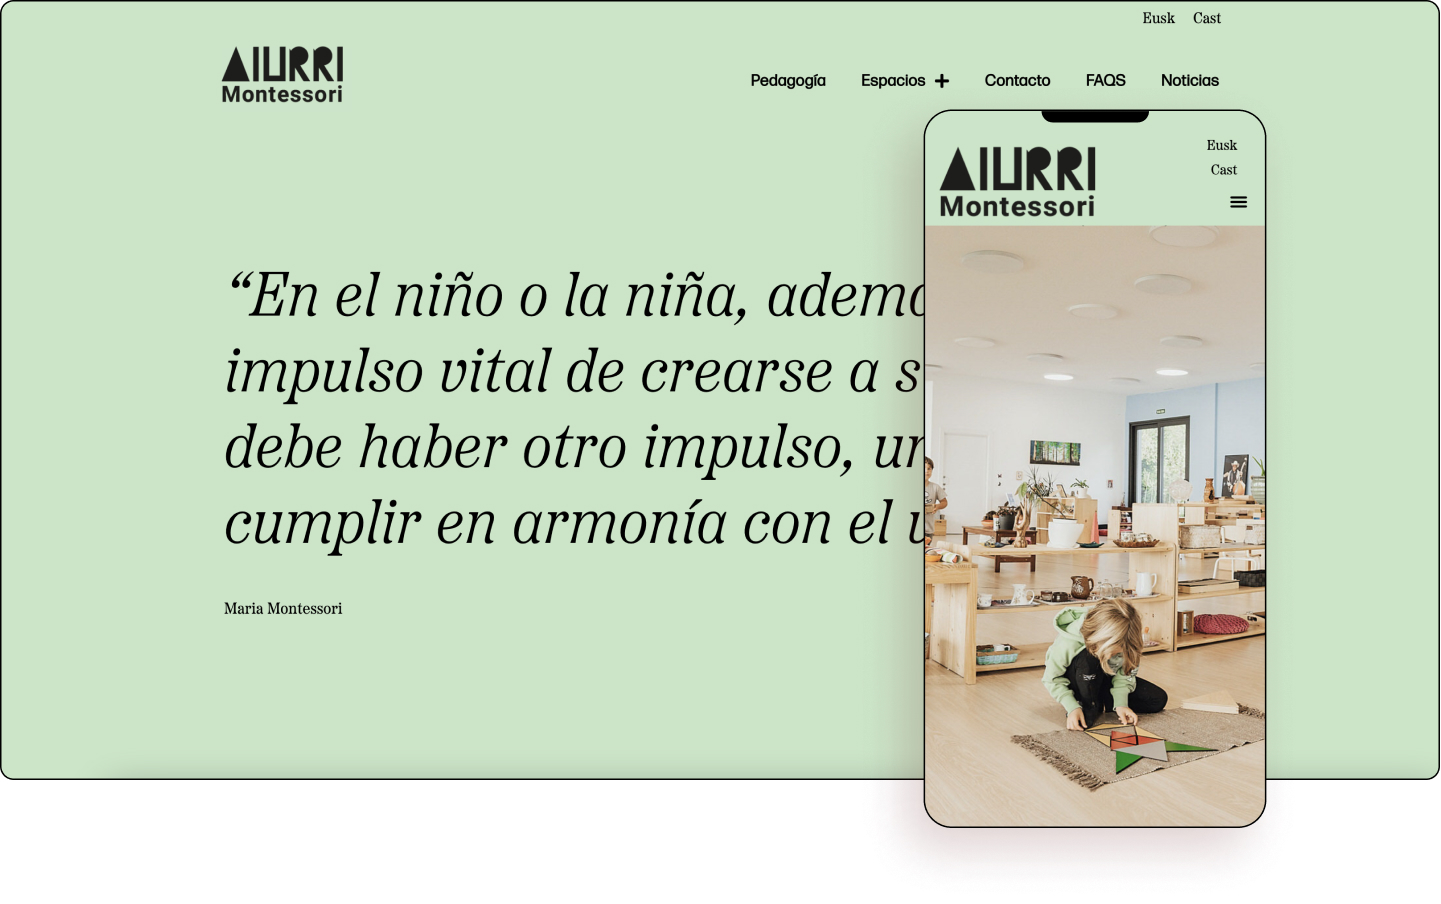 Aiurrimontessori.com Elementor Websites Of May 2022 8